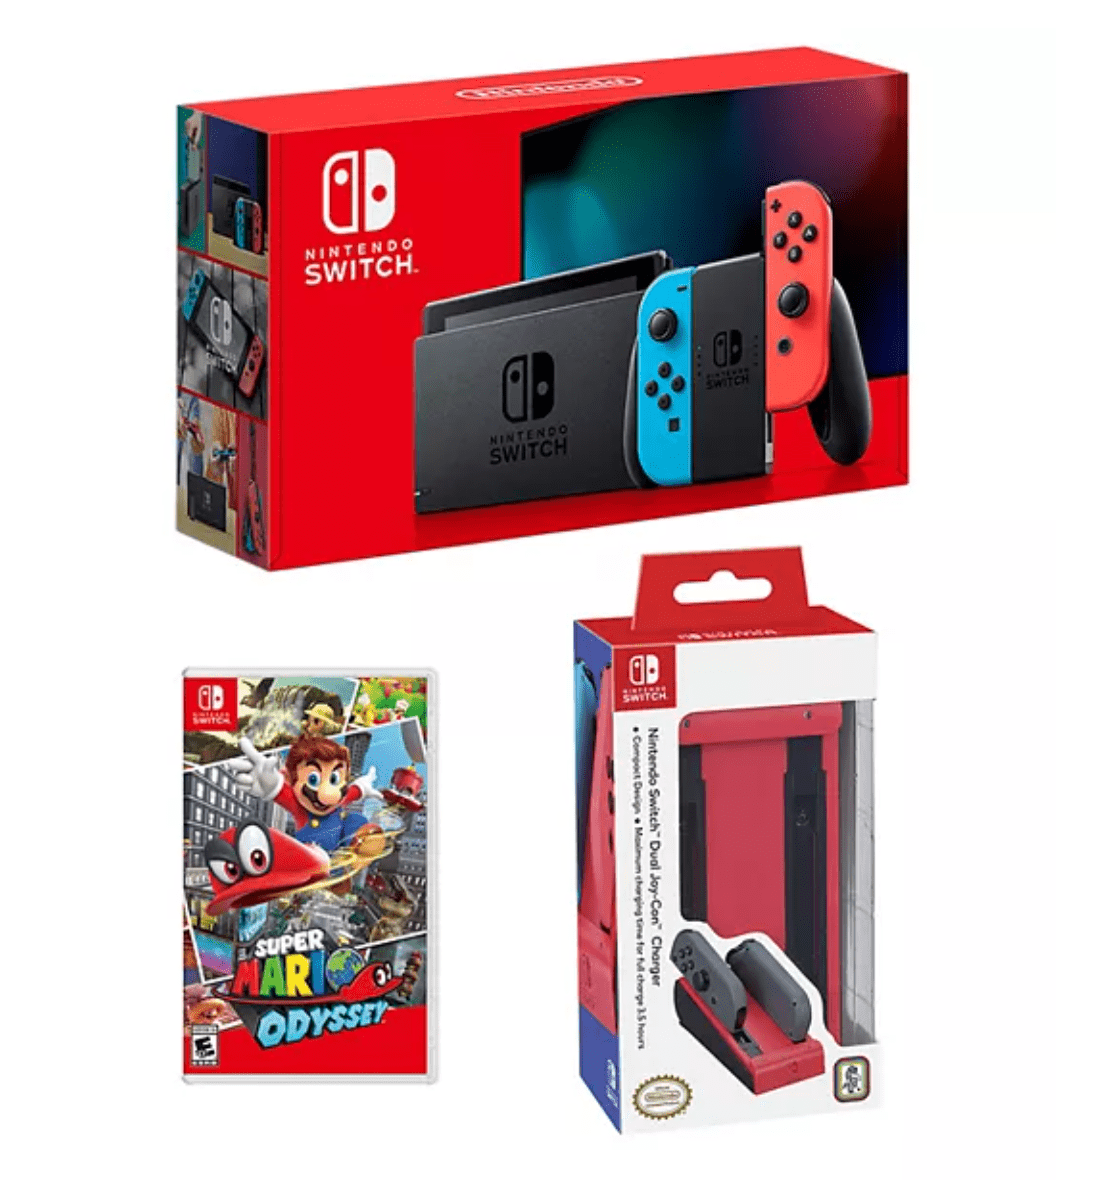 Nintendo Switch with Mario Odyssey & Dual Joy-Con - Walmart.com